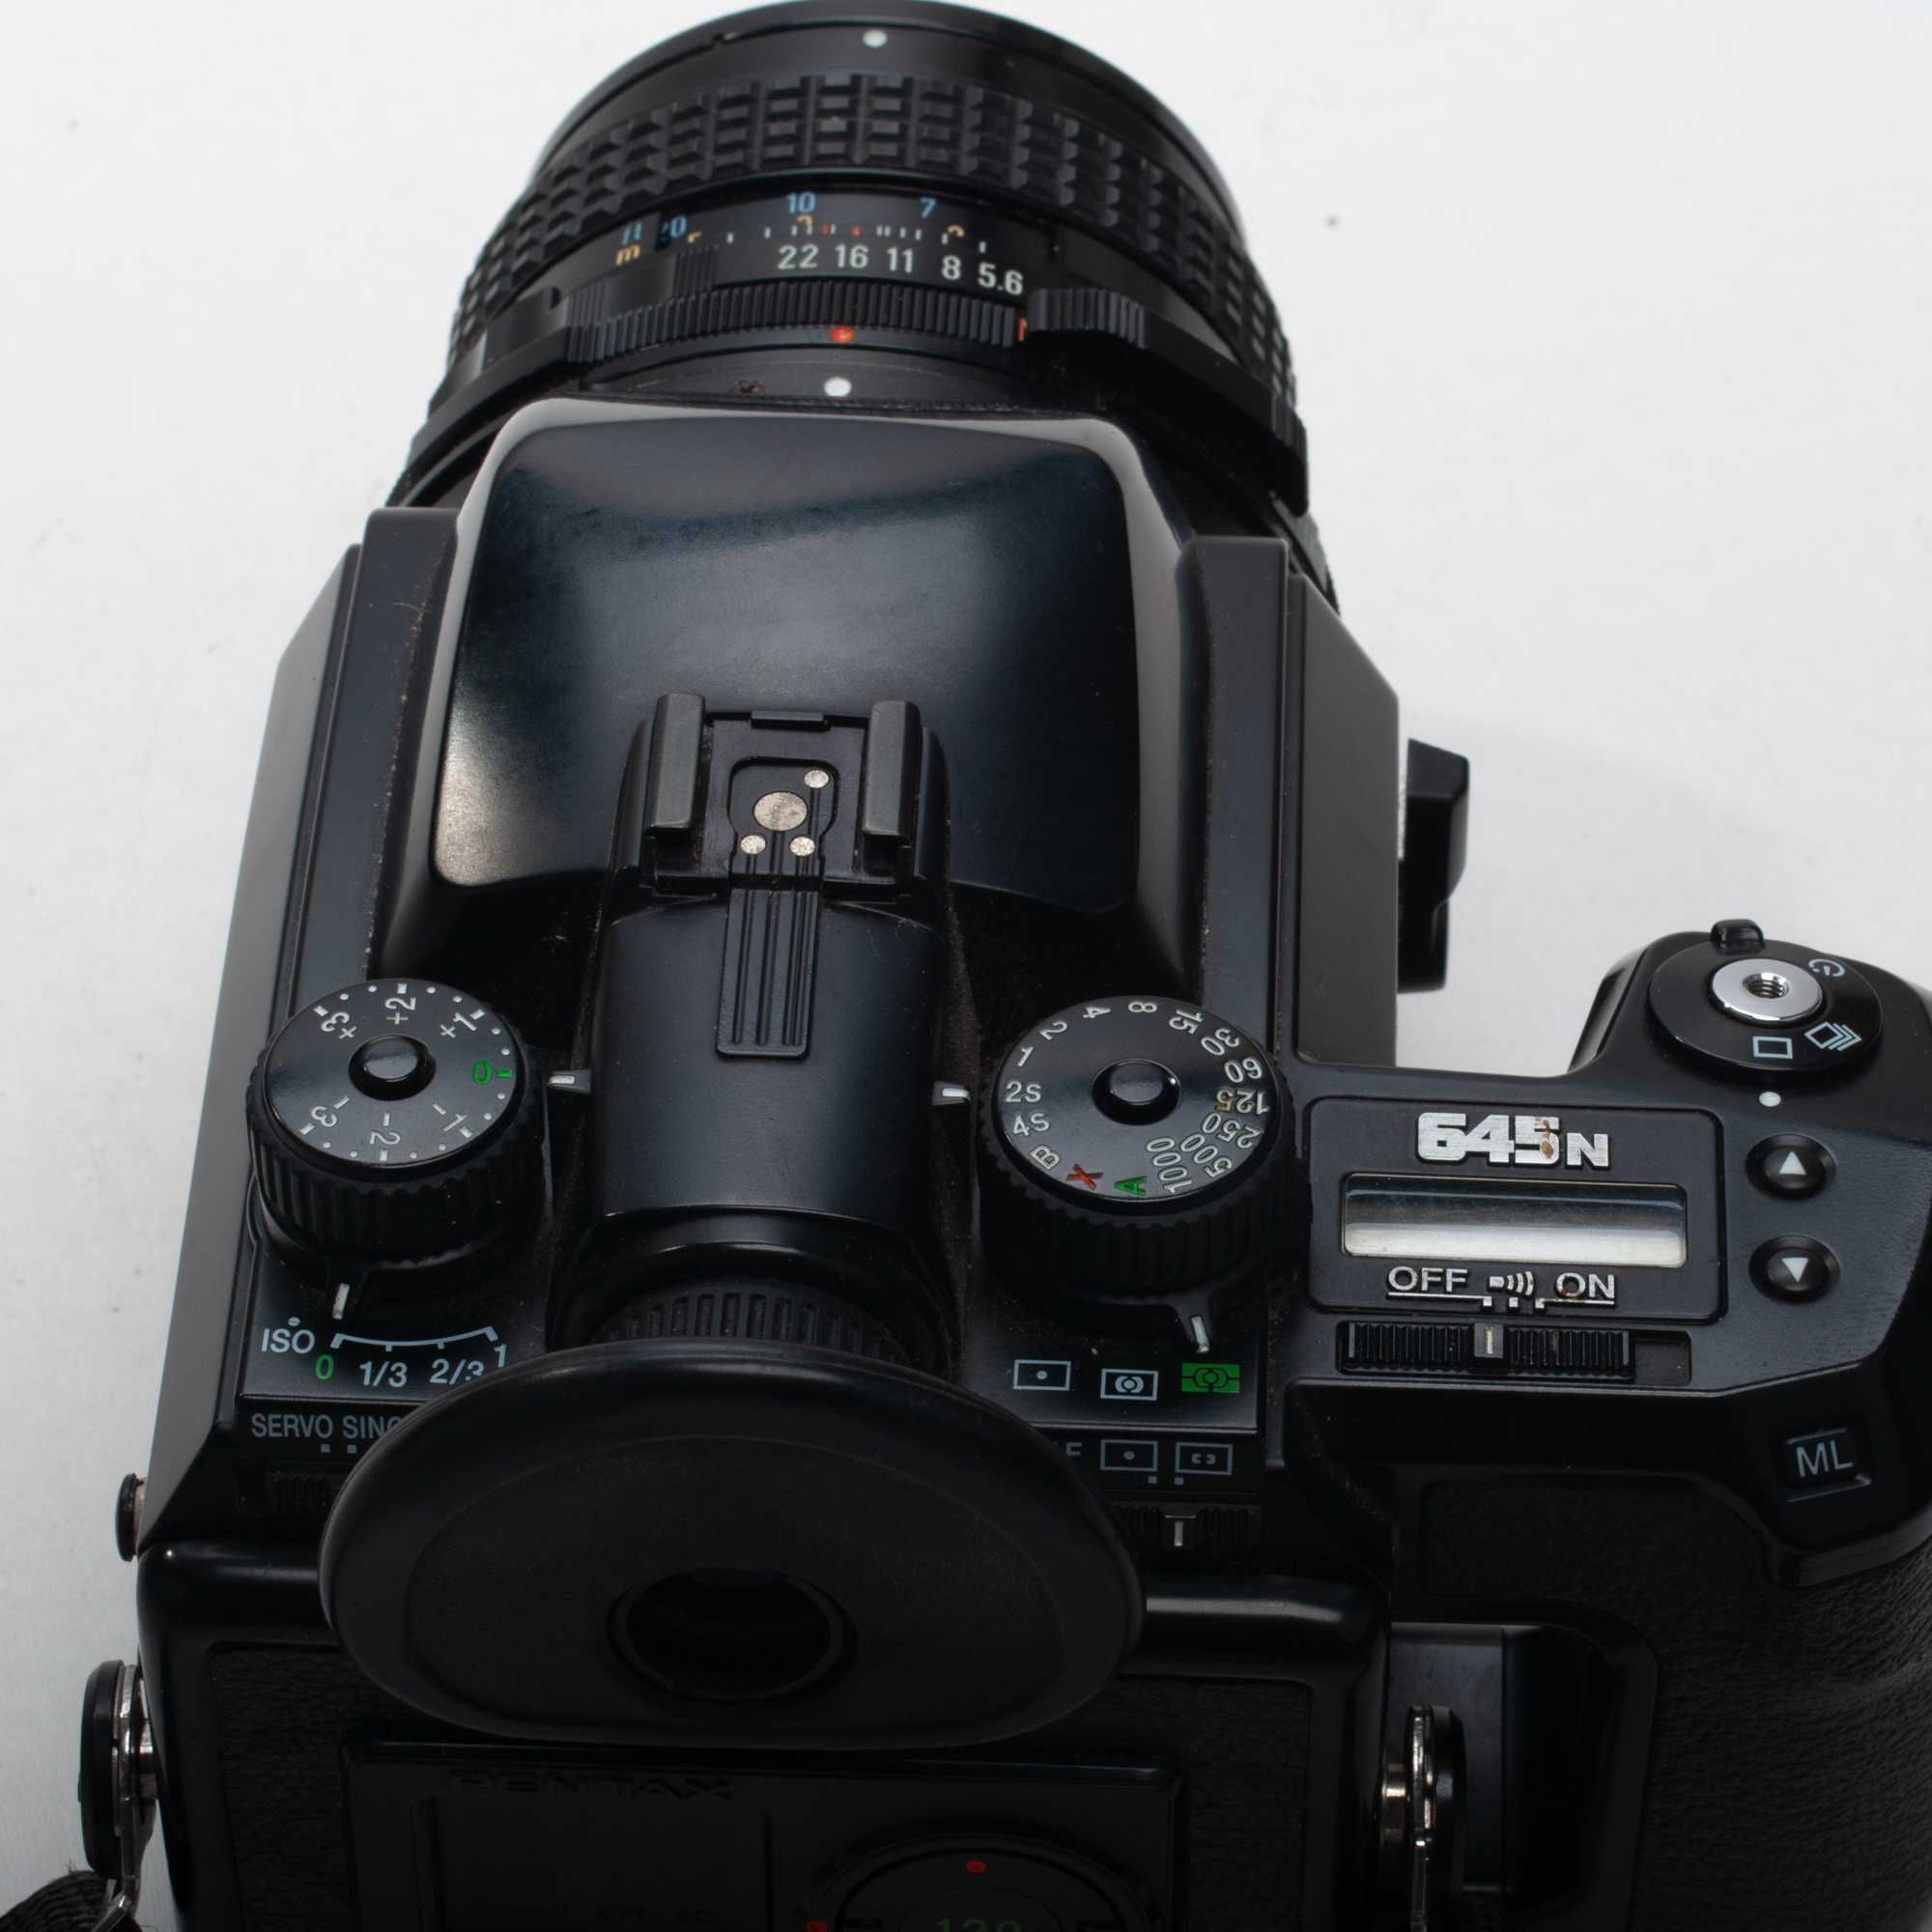 Камера фотоаппарат Pentax 645 N, и объективы к нему